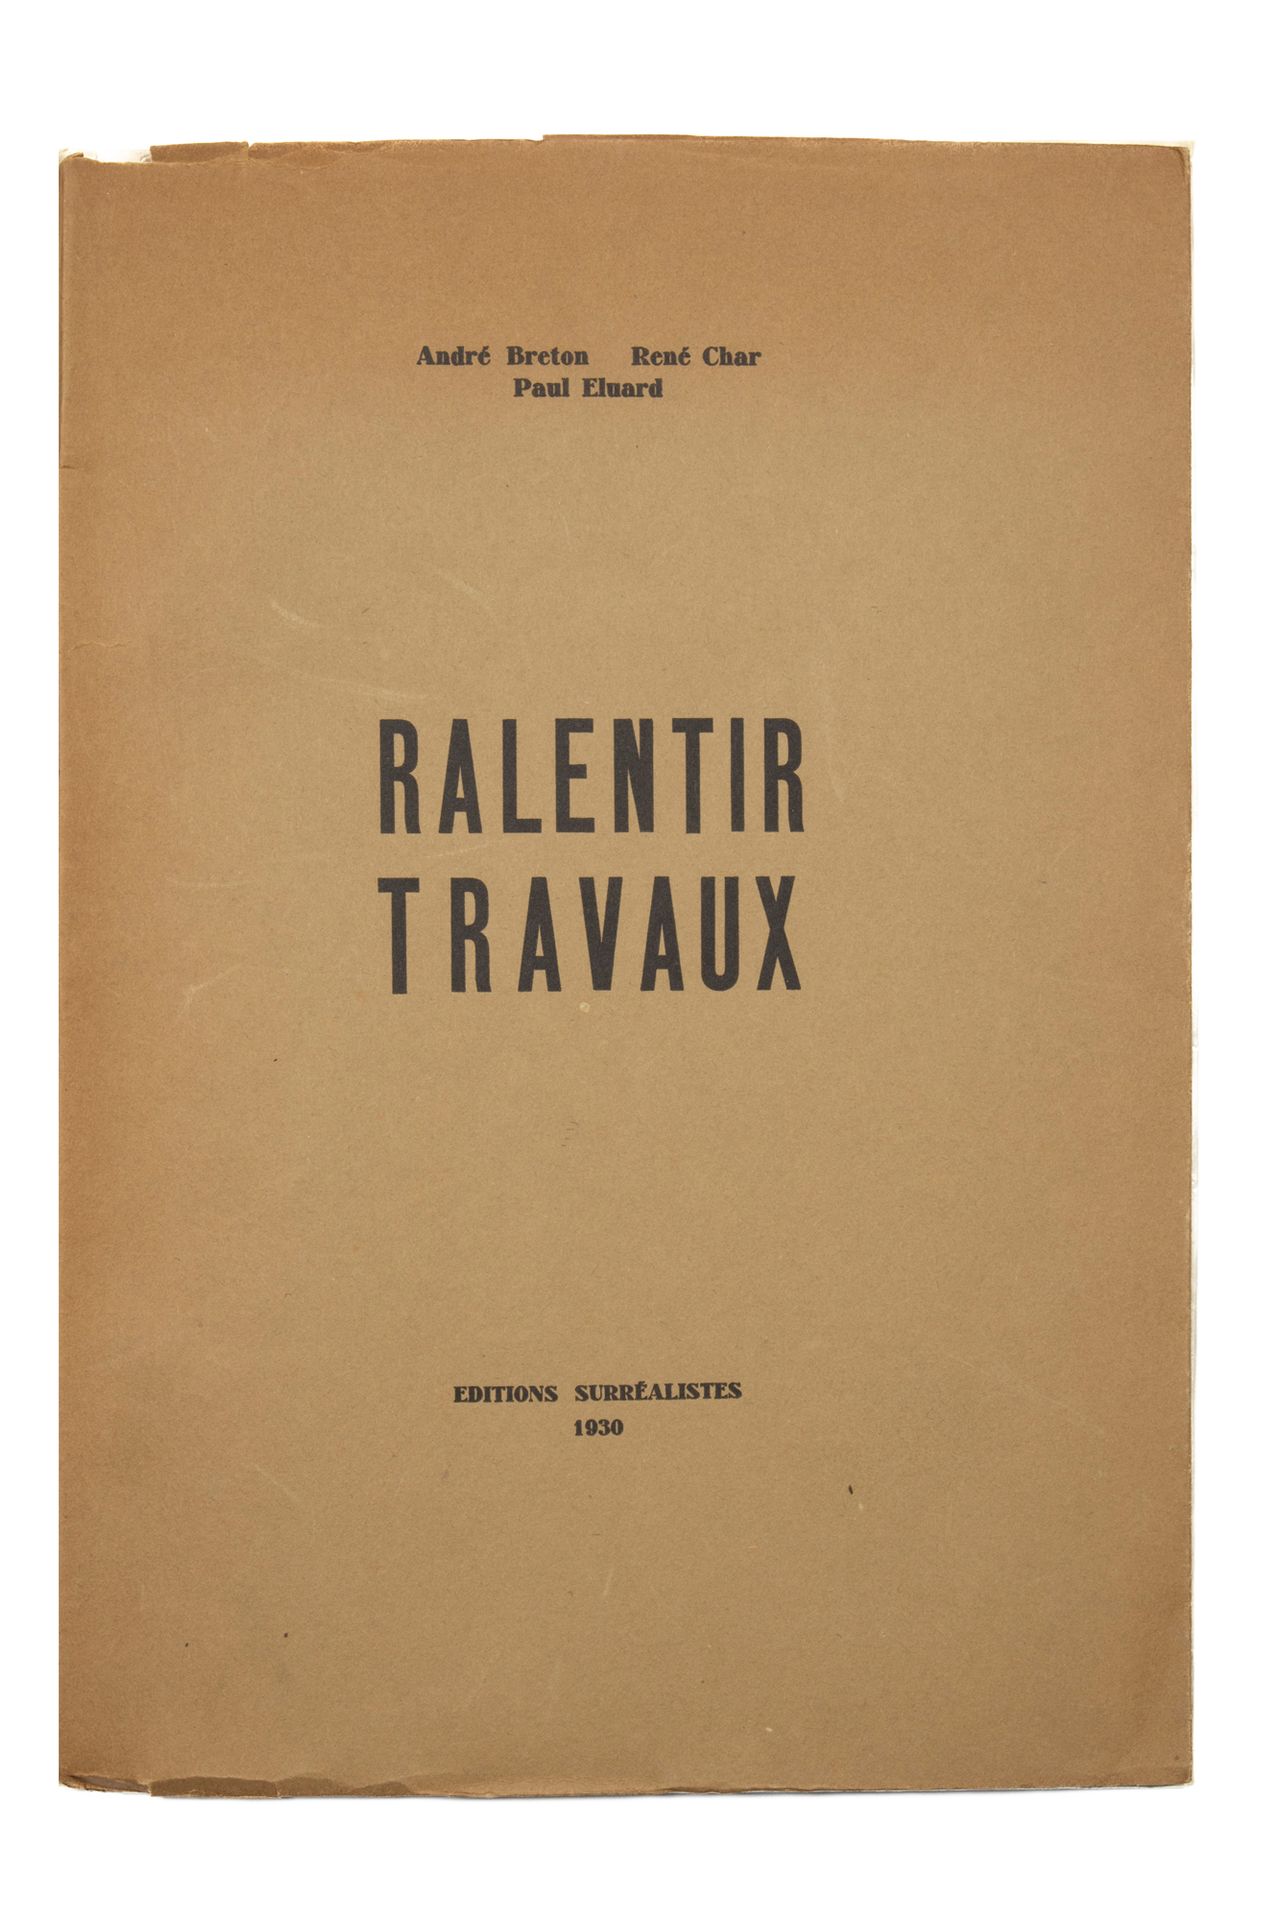 BRETON André - CHAR René - ELUARD Paul. 放慢工程进度。Surréalistes出版社，1930年。四开本，平装本。
有编&hellip;